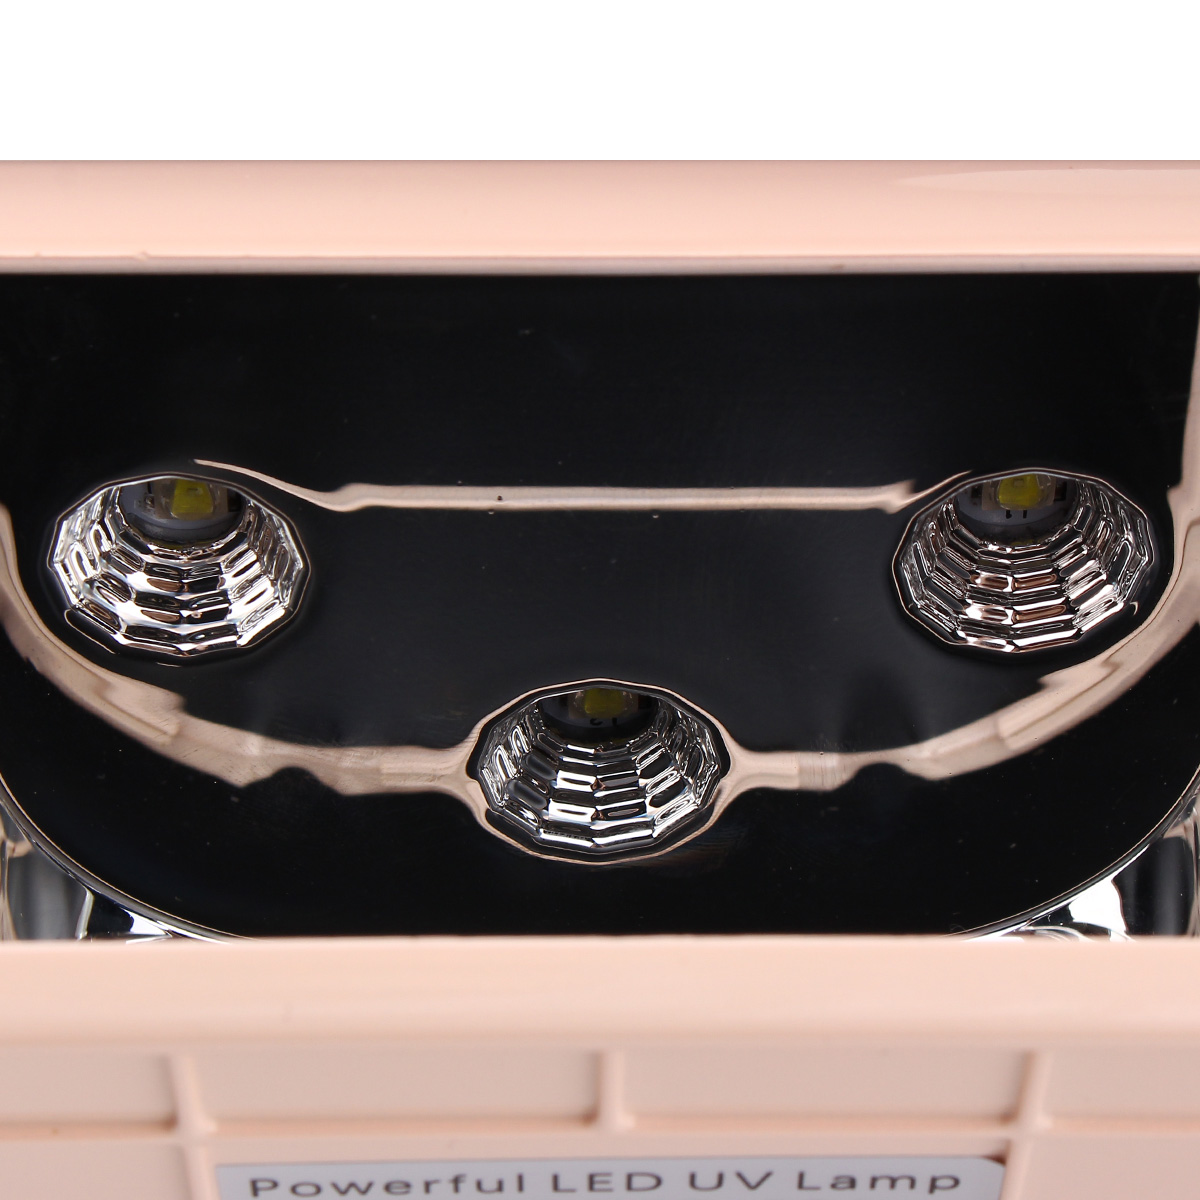 9W-LED-UV-Lamp-Nail-Art-Dryer-Machine-Gel-Polish-Curing-Manicure-Pedicure-Salon-Tools-110-240V-1293988